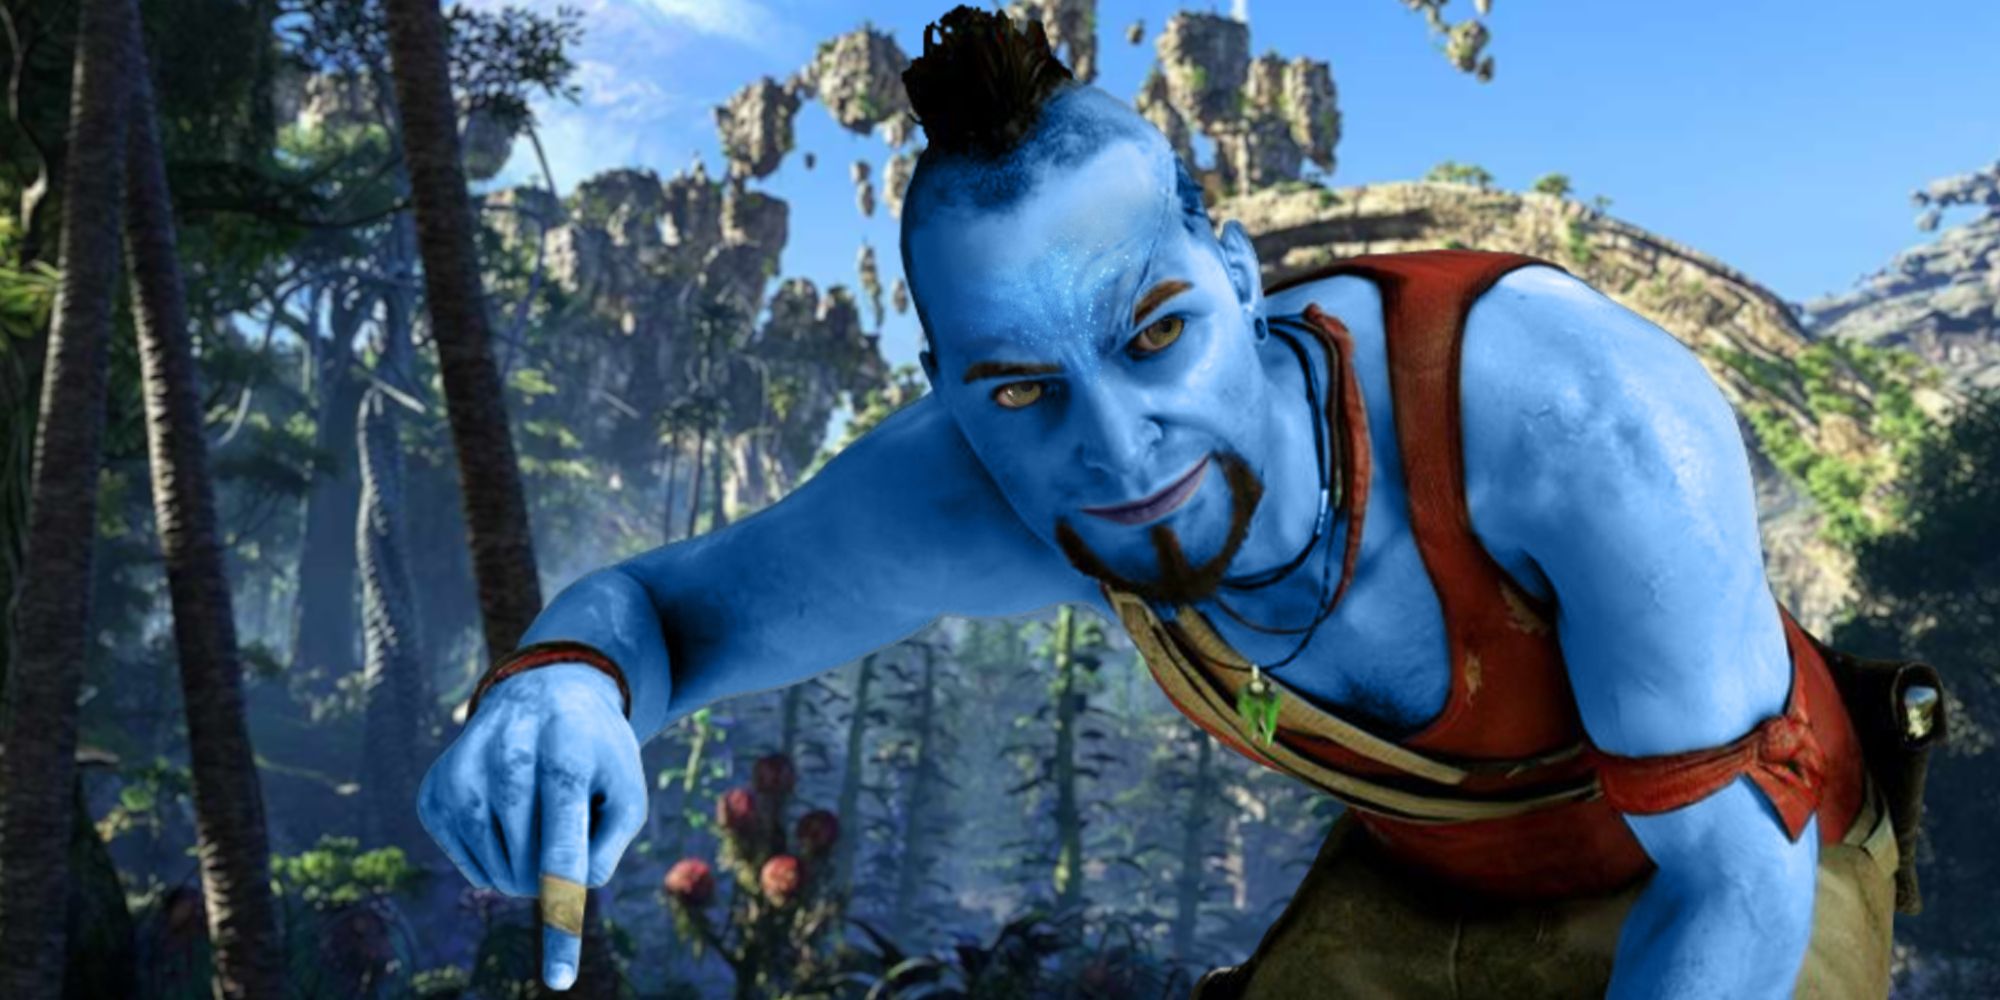 Vaas from Far Cry 3 dressed like an Avatar Na'vi